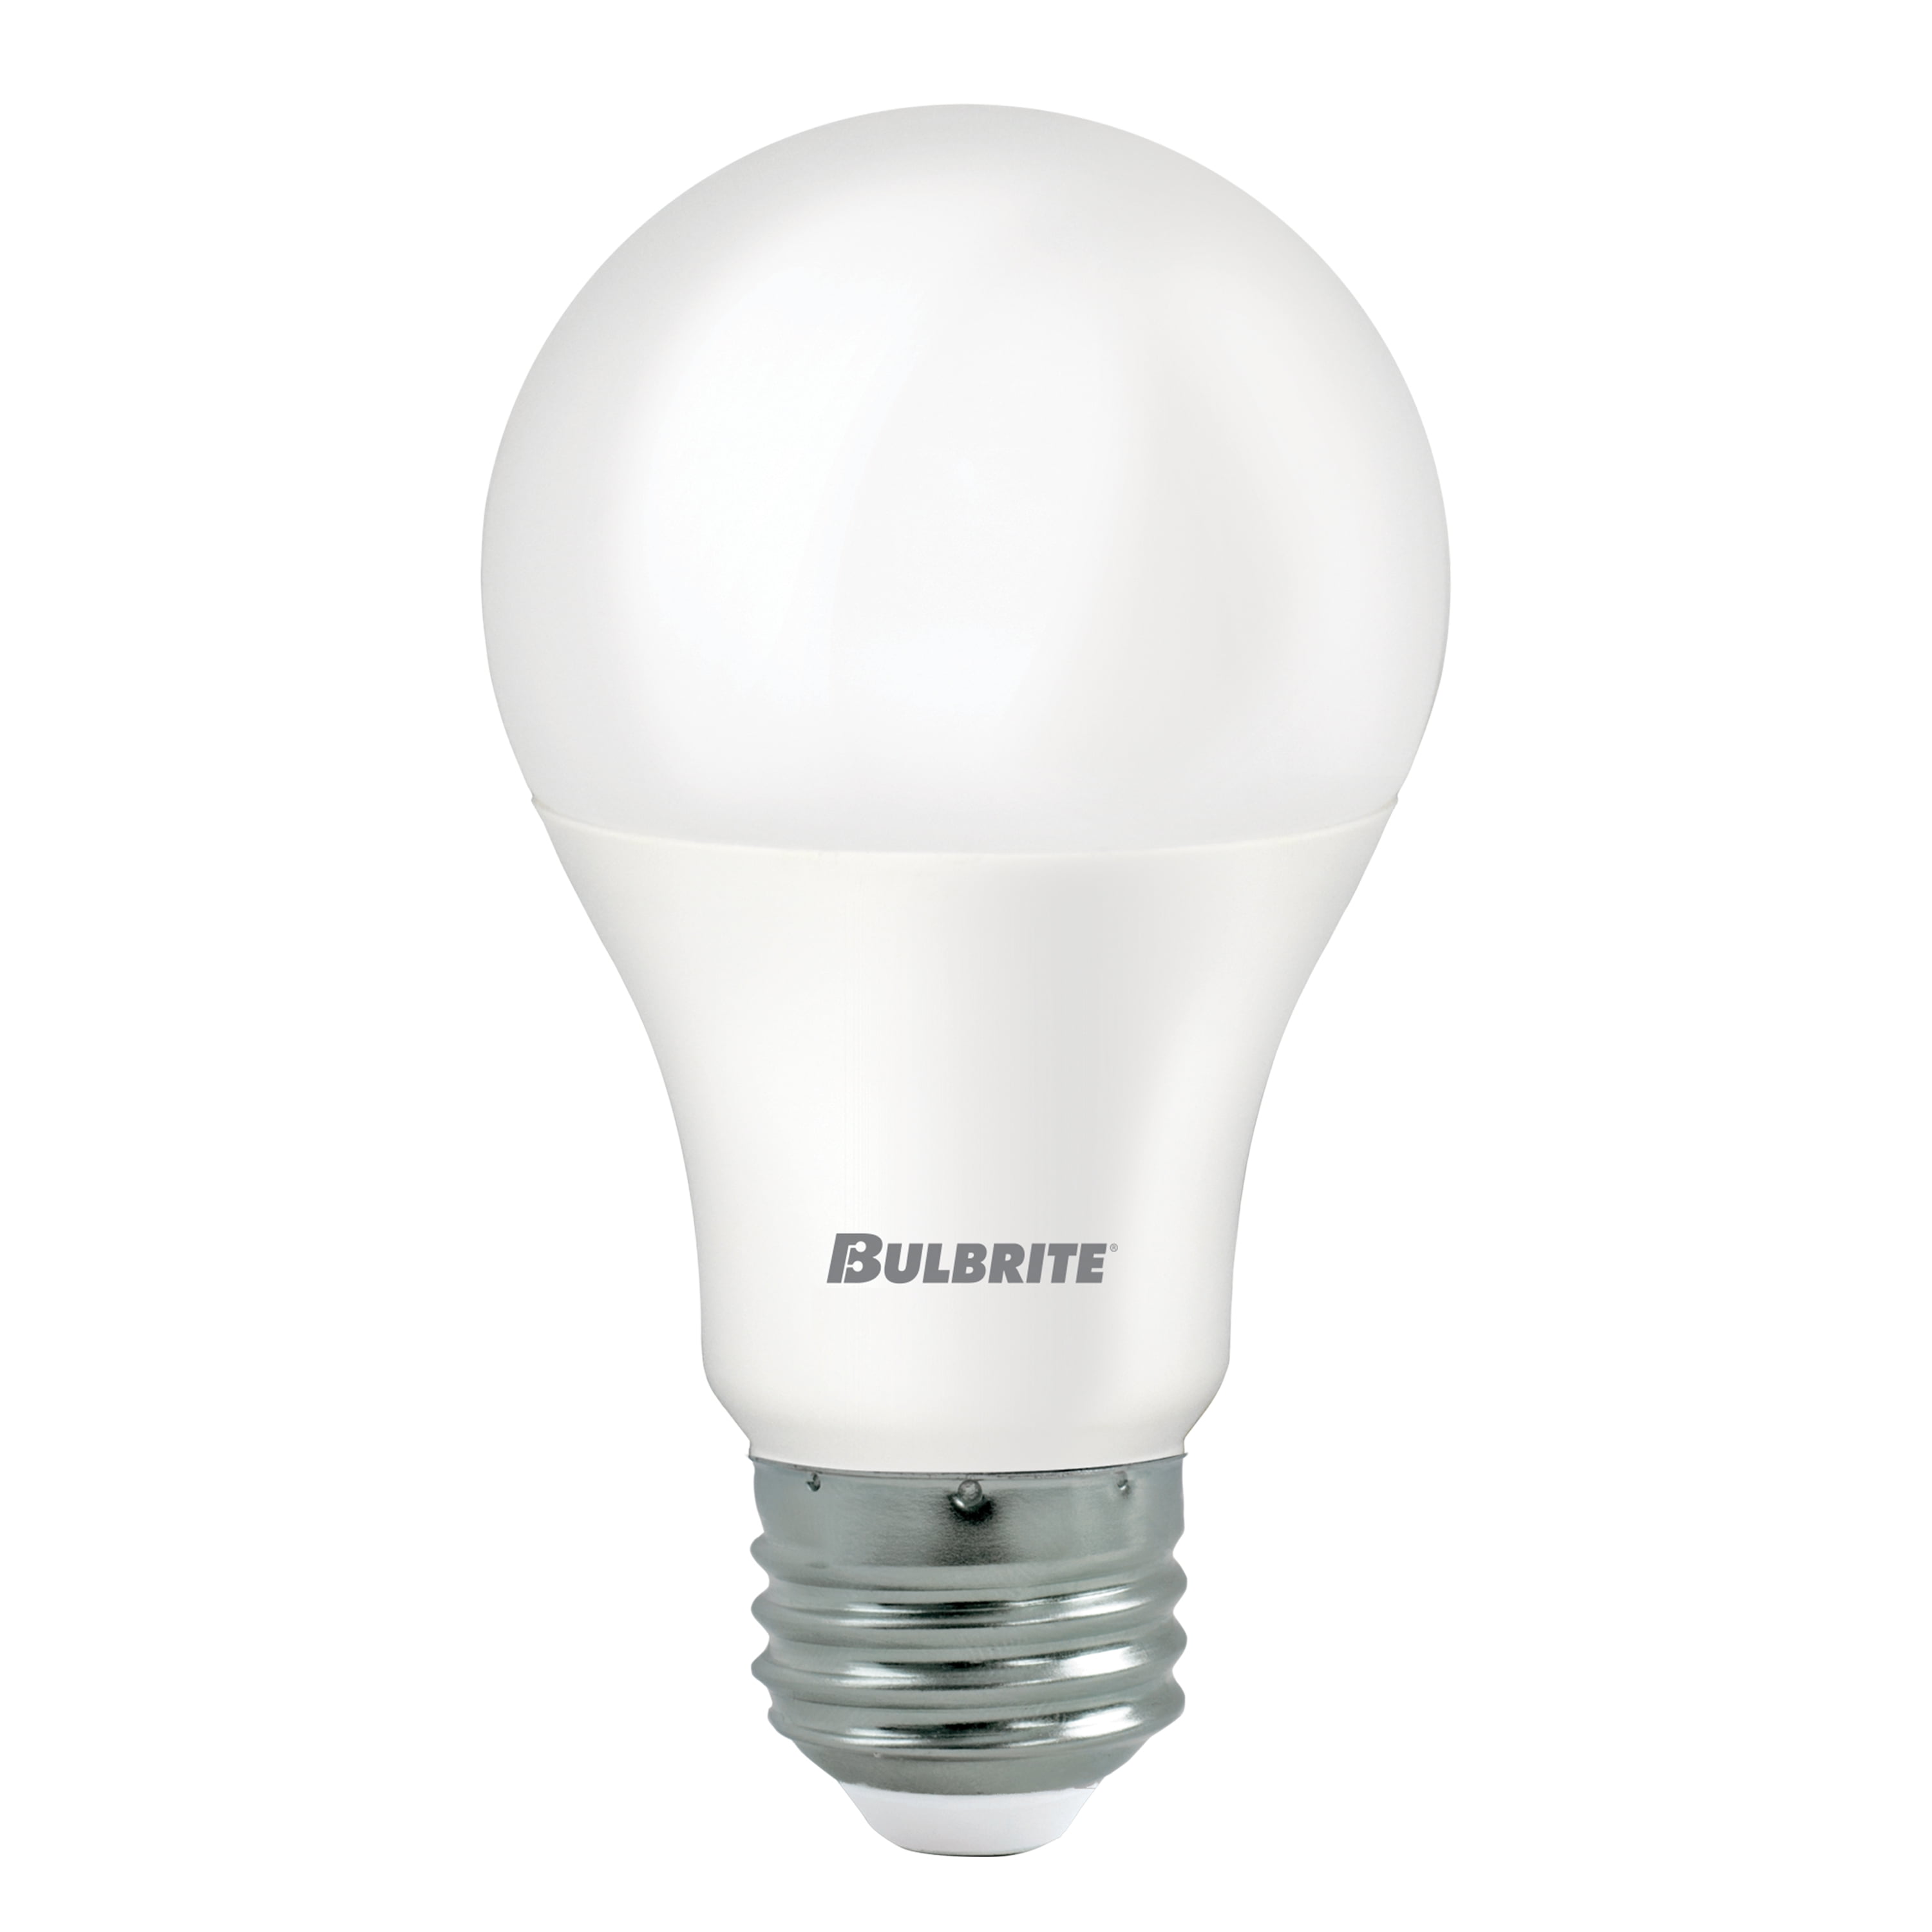 Picture of Bulbrite 862713 9 watt Frost A19 LED Light Bulbs with Medium E26 Base, 2700K Warm White Light, 750 Lumens - Pack of 8